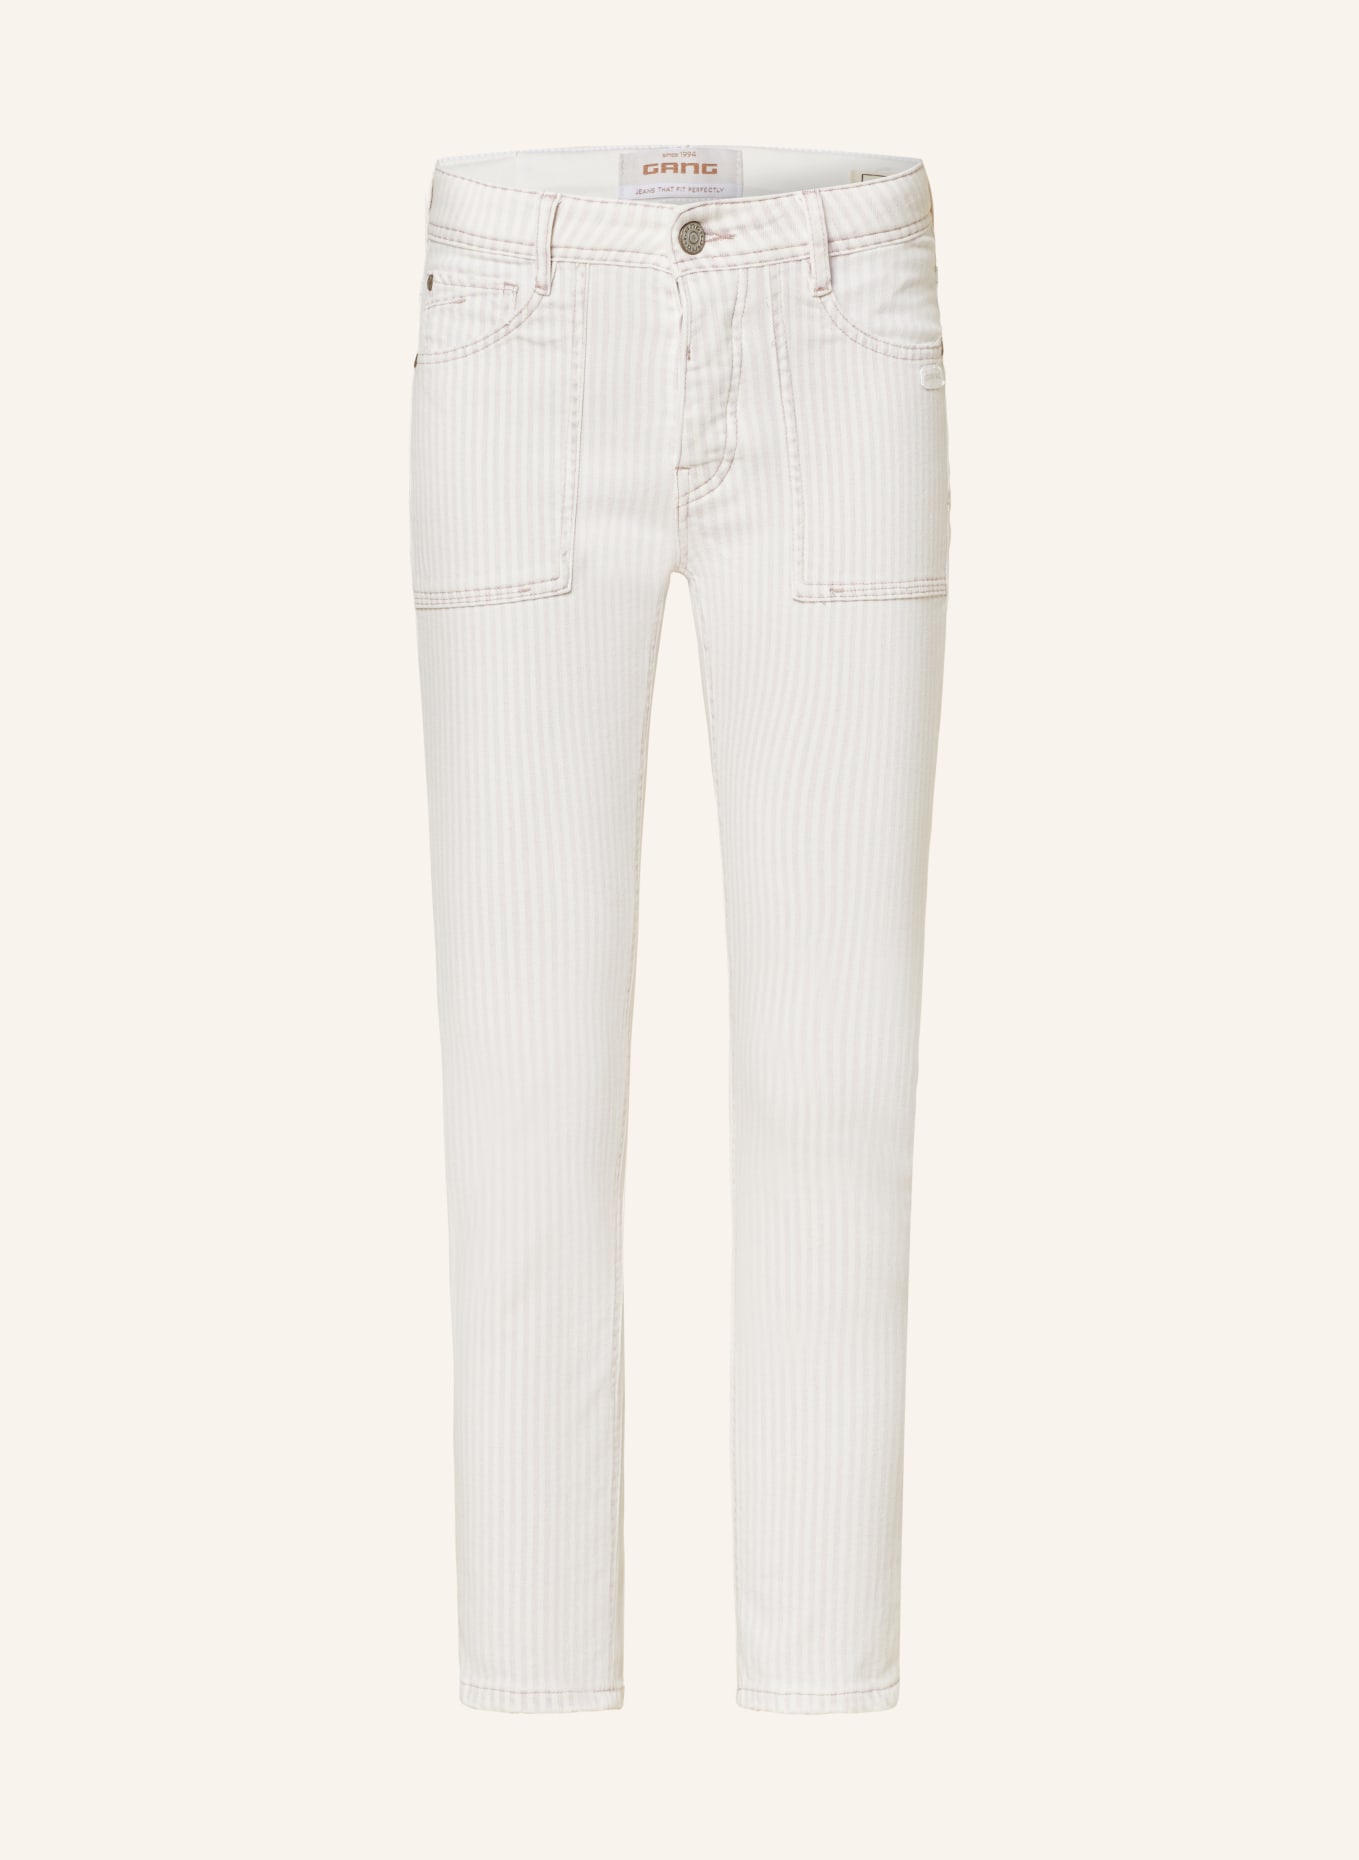 GANG 7/8 jeans NICA, Color: 3401 lilac stripes (Image 1)